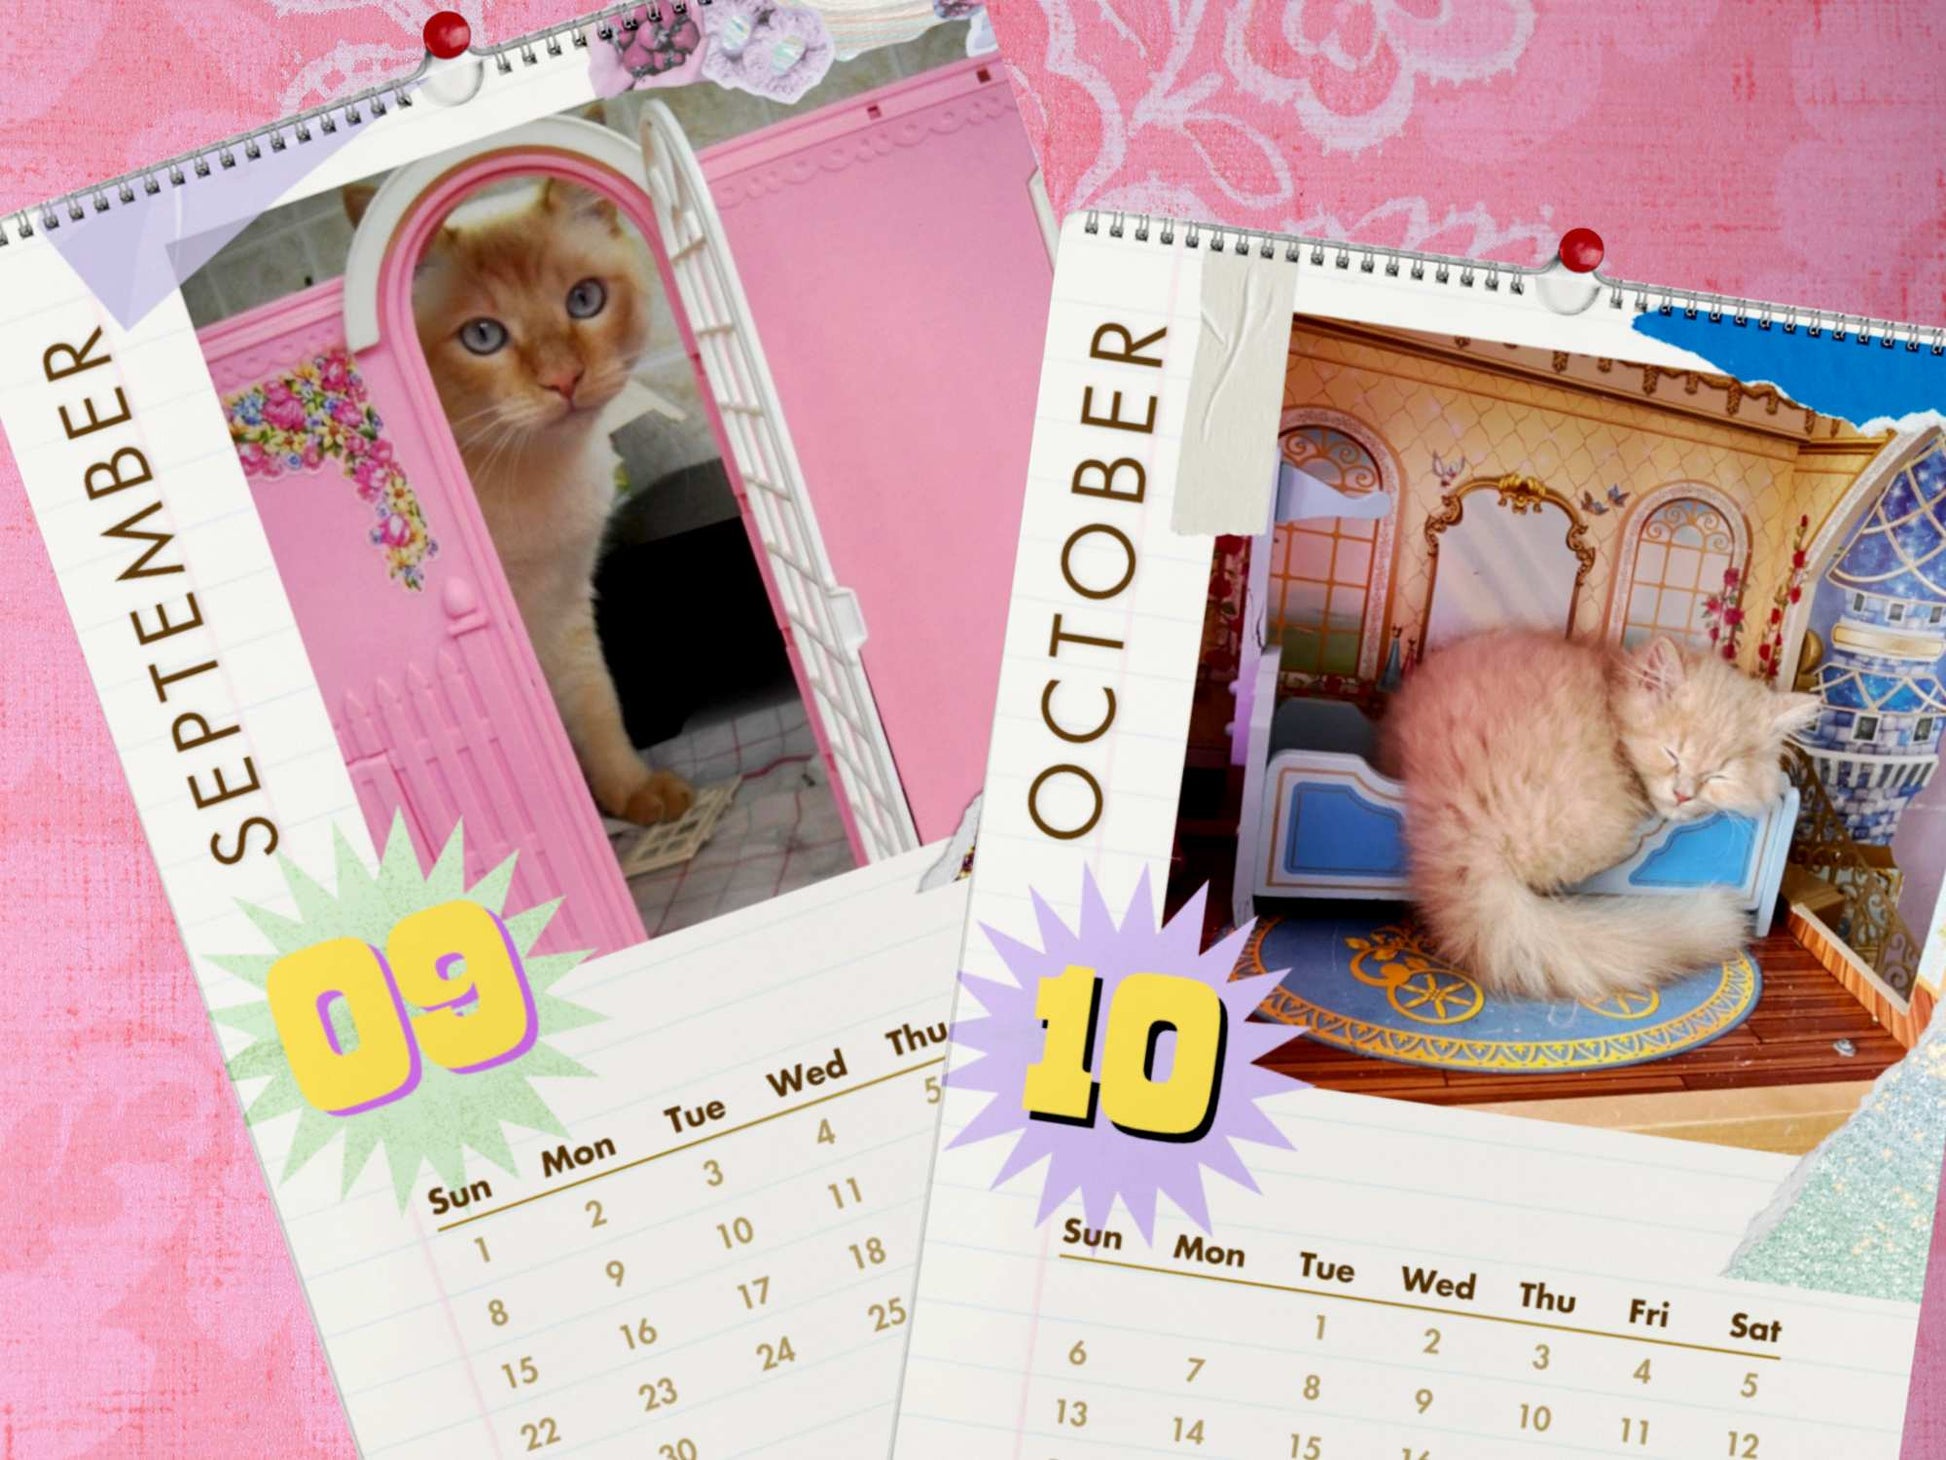 Cats in Dollhouses 2024 Wall Calendar